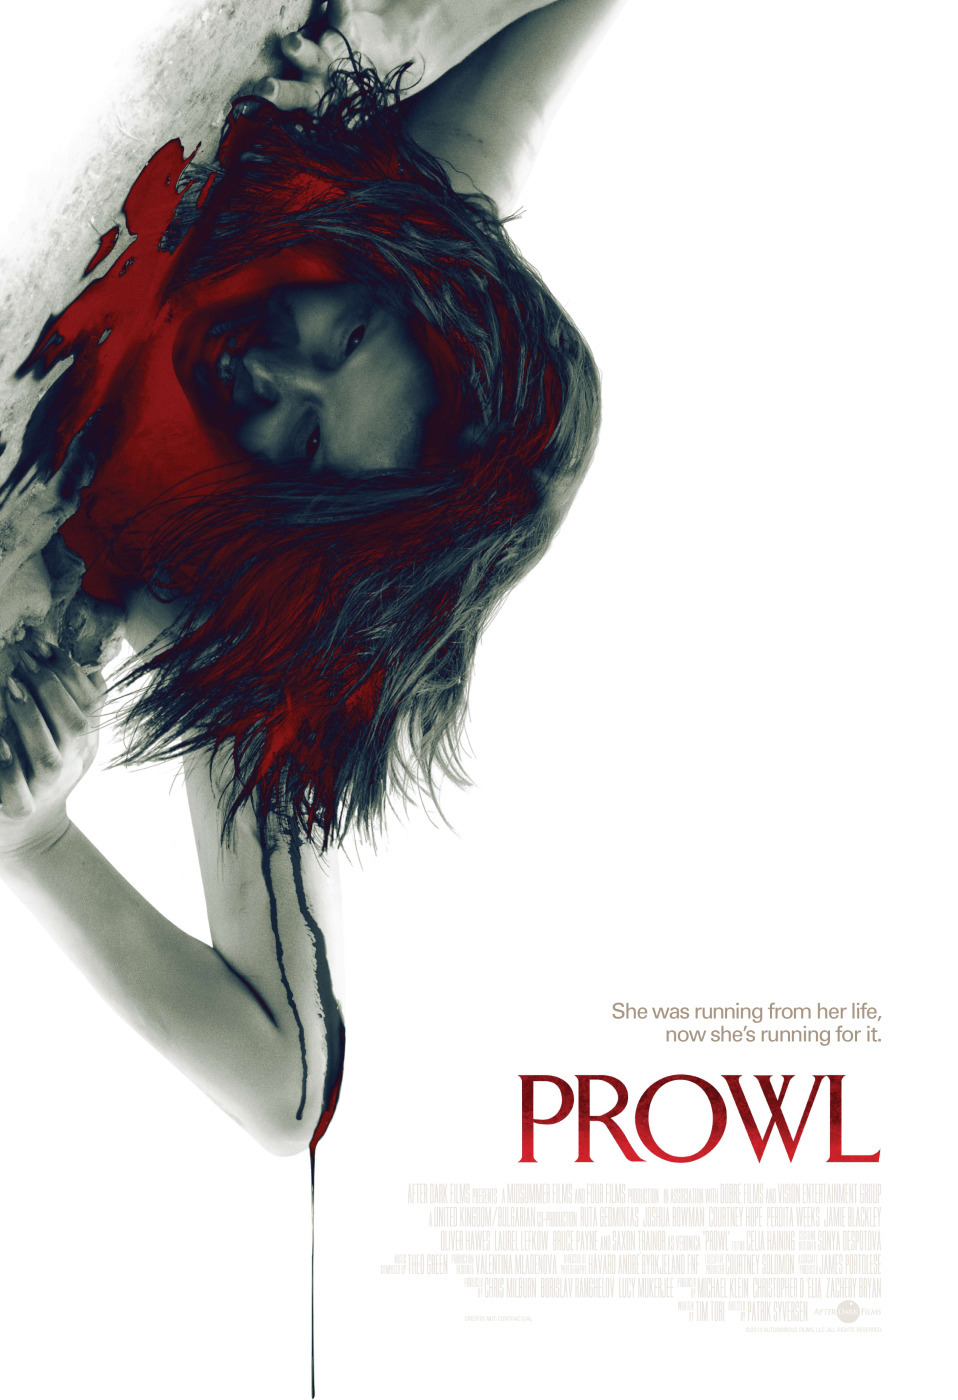 Prowl movies